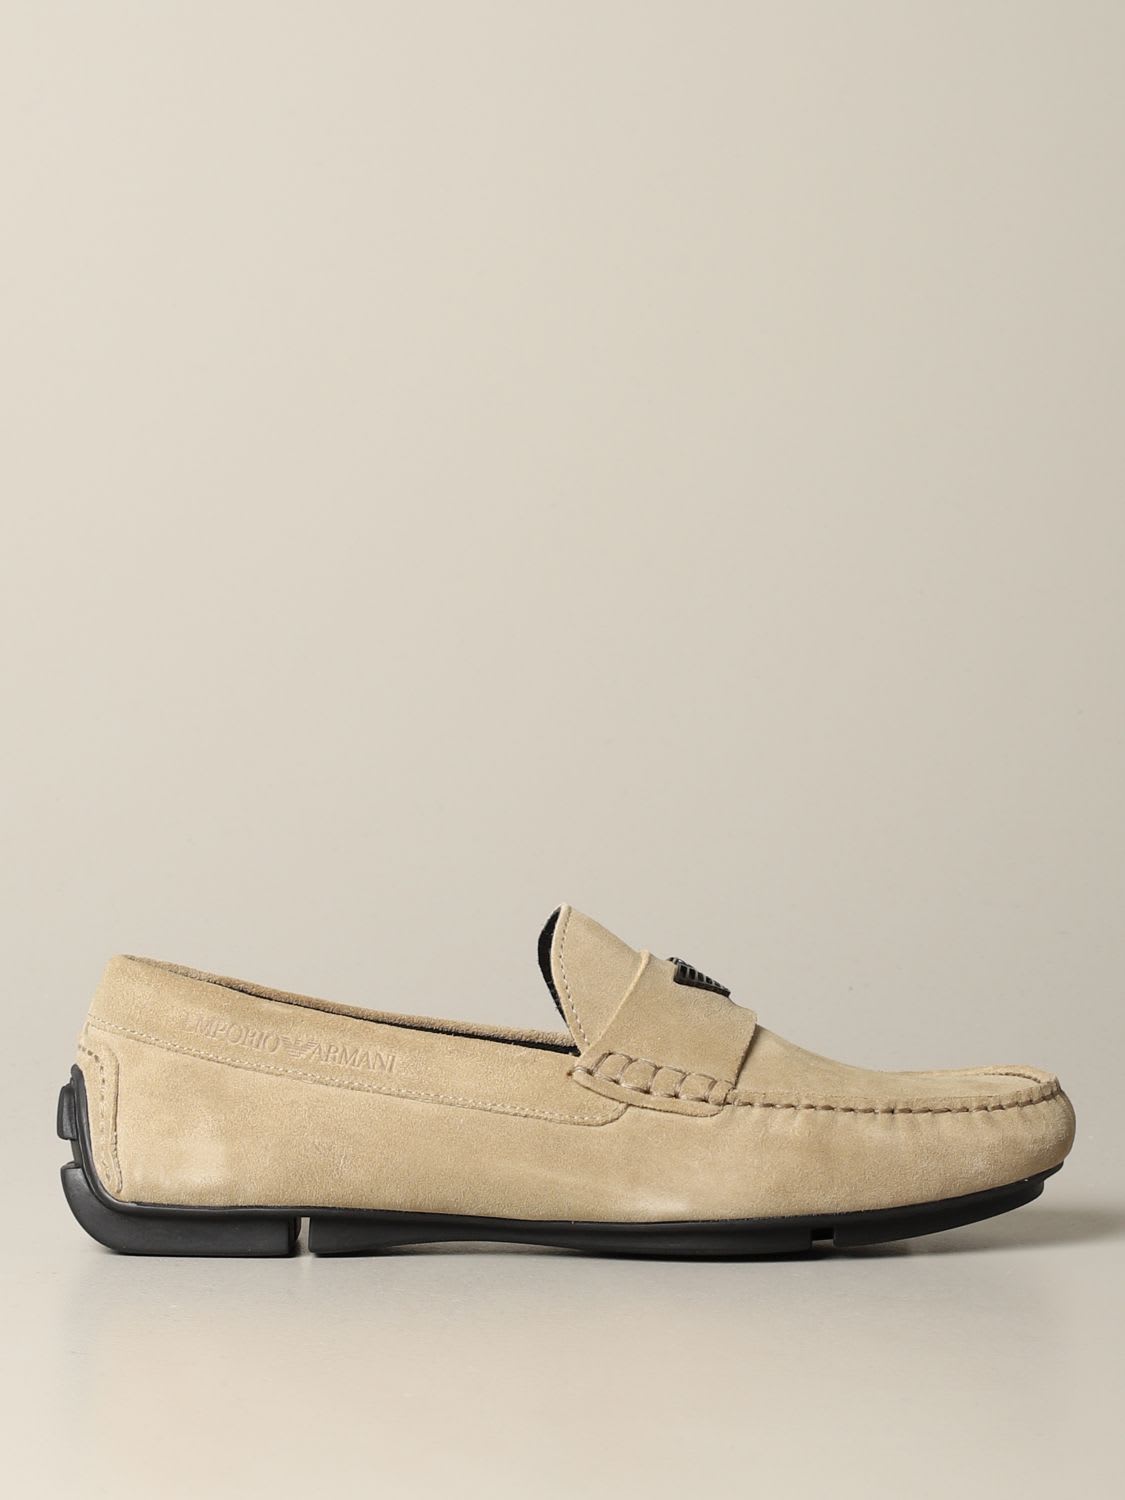 Emporio Armani Loafers \u0026 Boat Shoes 